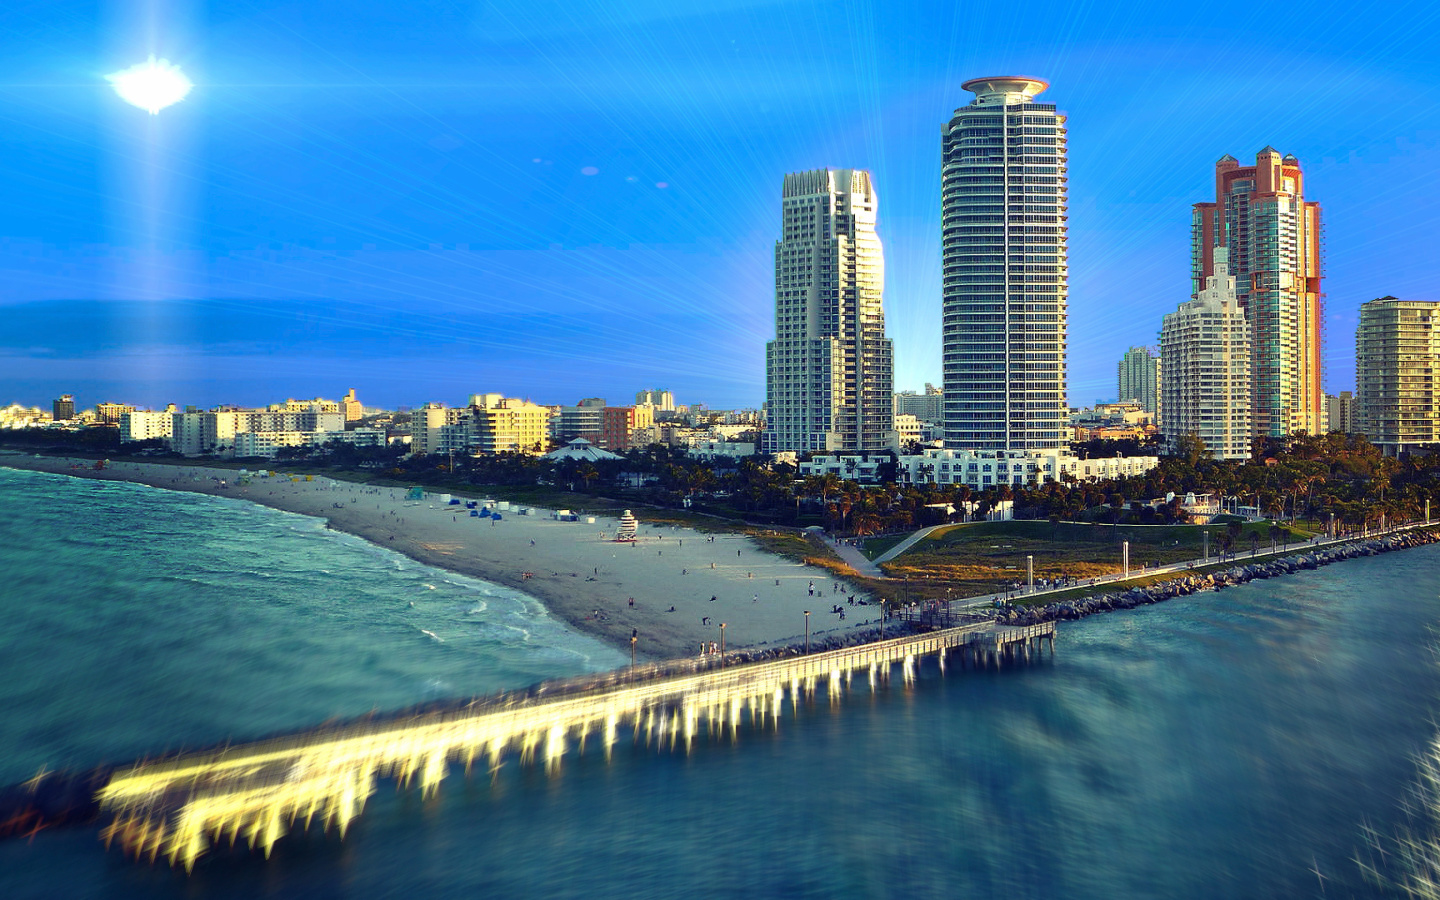 Das Miami Beach with Hotels Wallpaper 1440x900